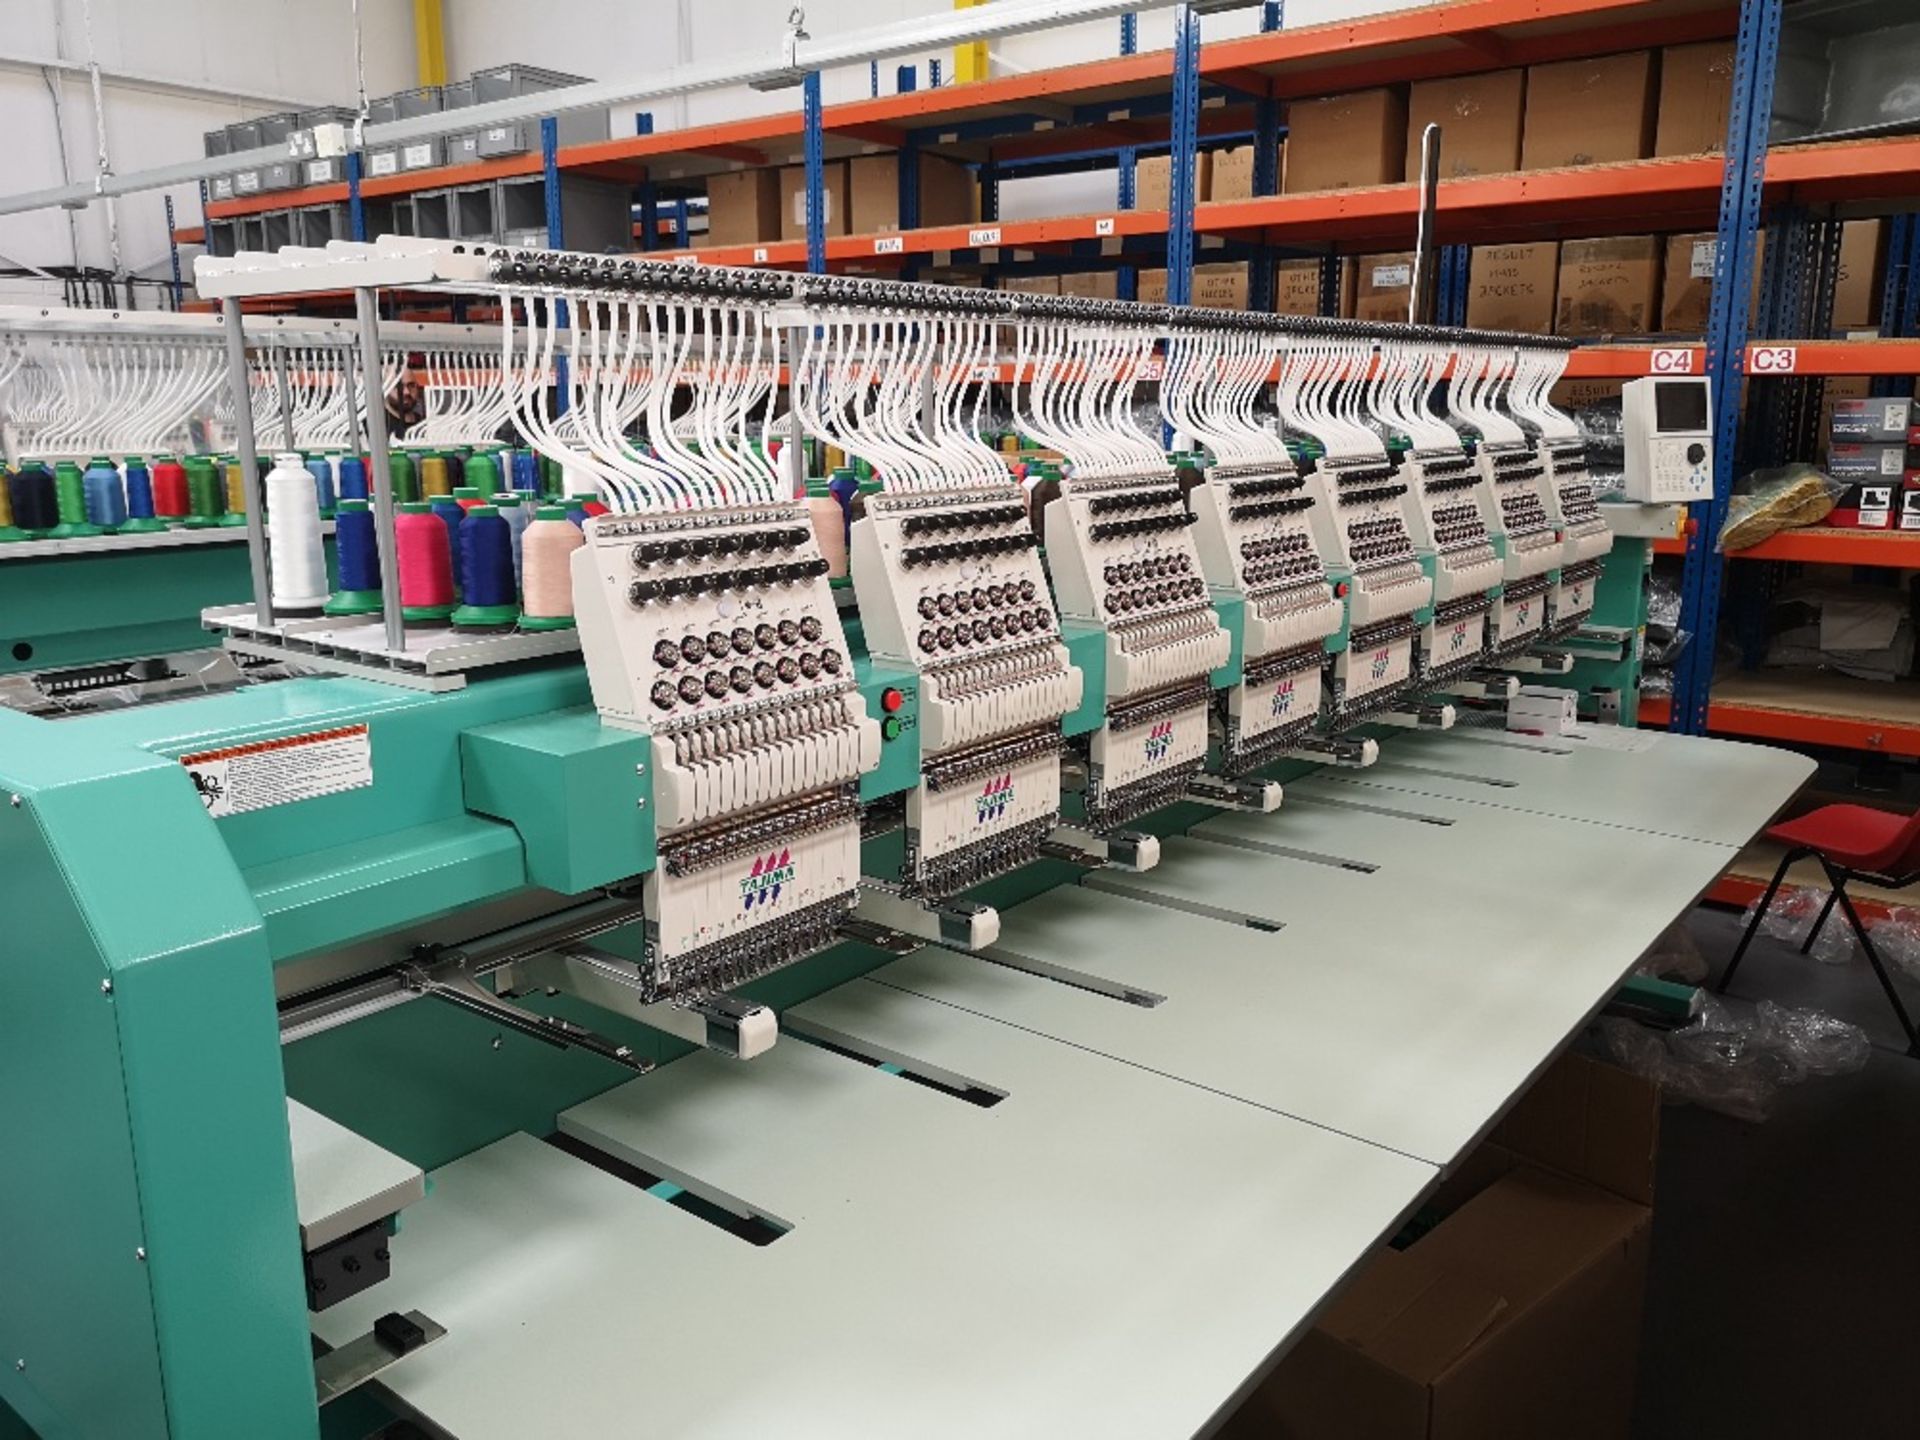 Tajima TFMX-II C1508 Electronic Multi Head Automatic Embroidery Machine (2019) - Image 2 of 8